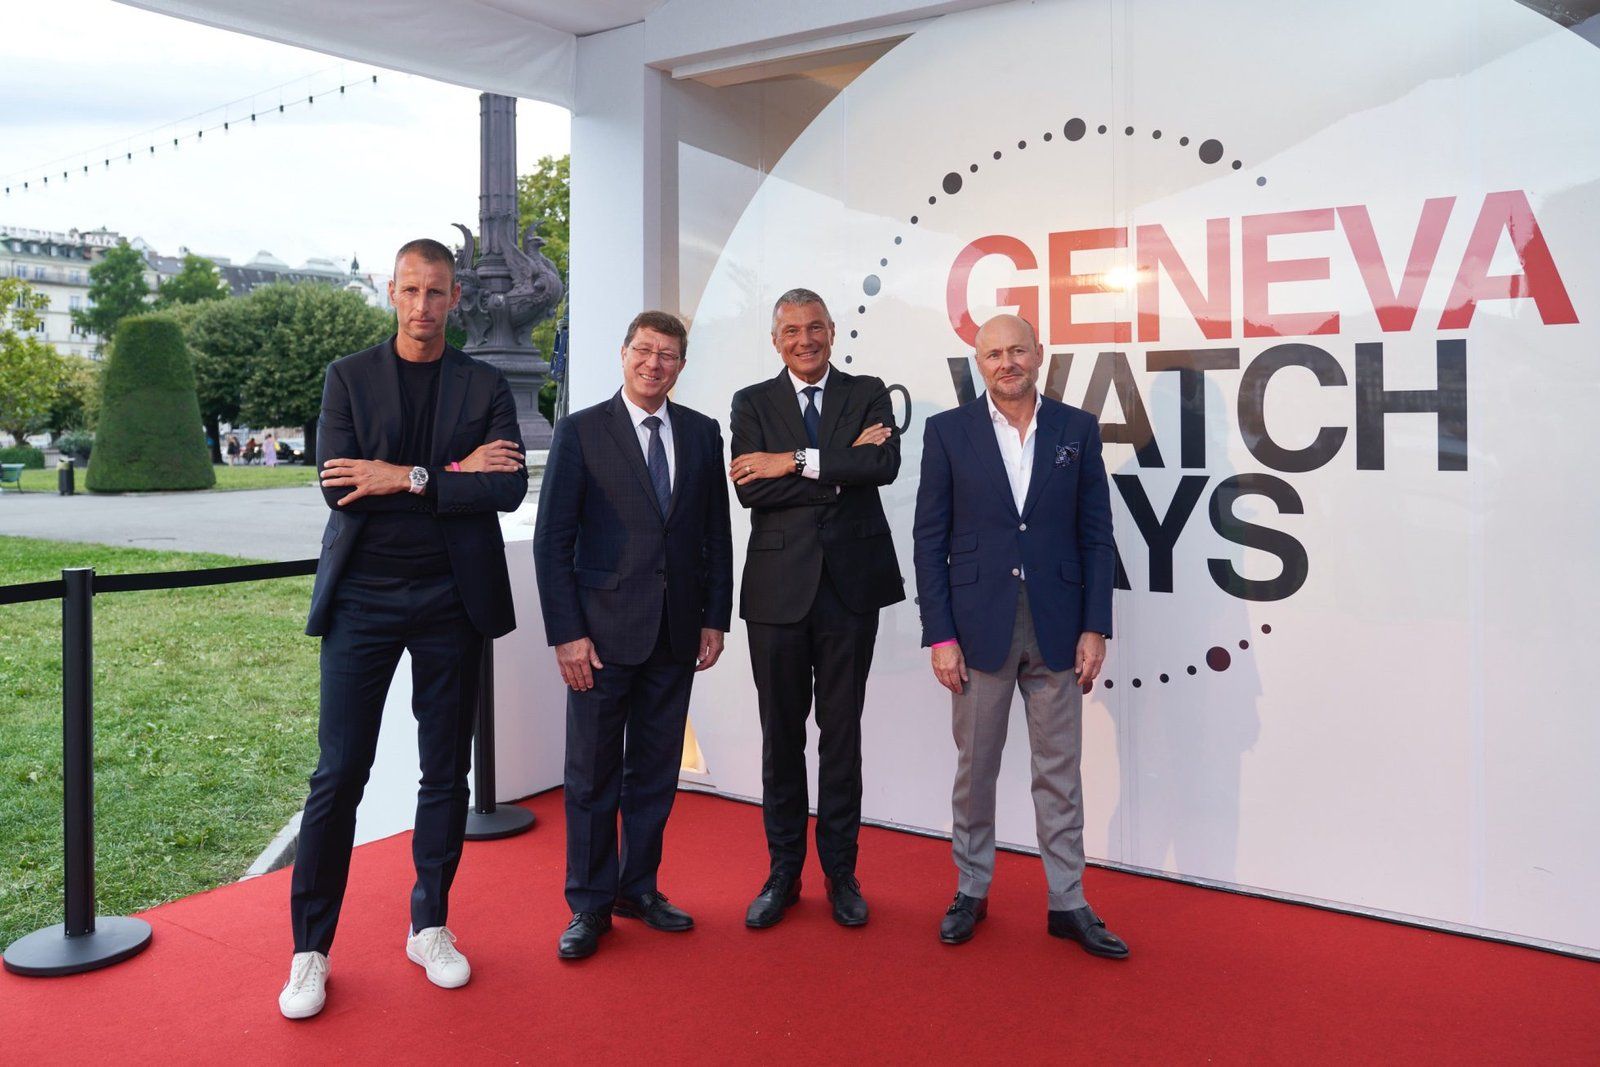 Geneva Watch Days 2021